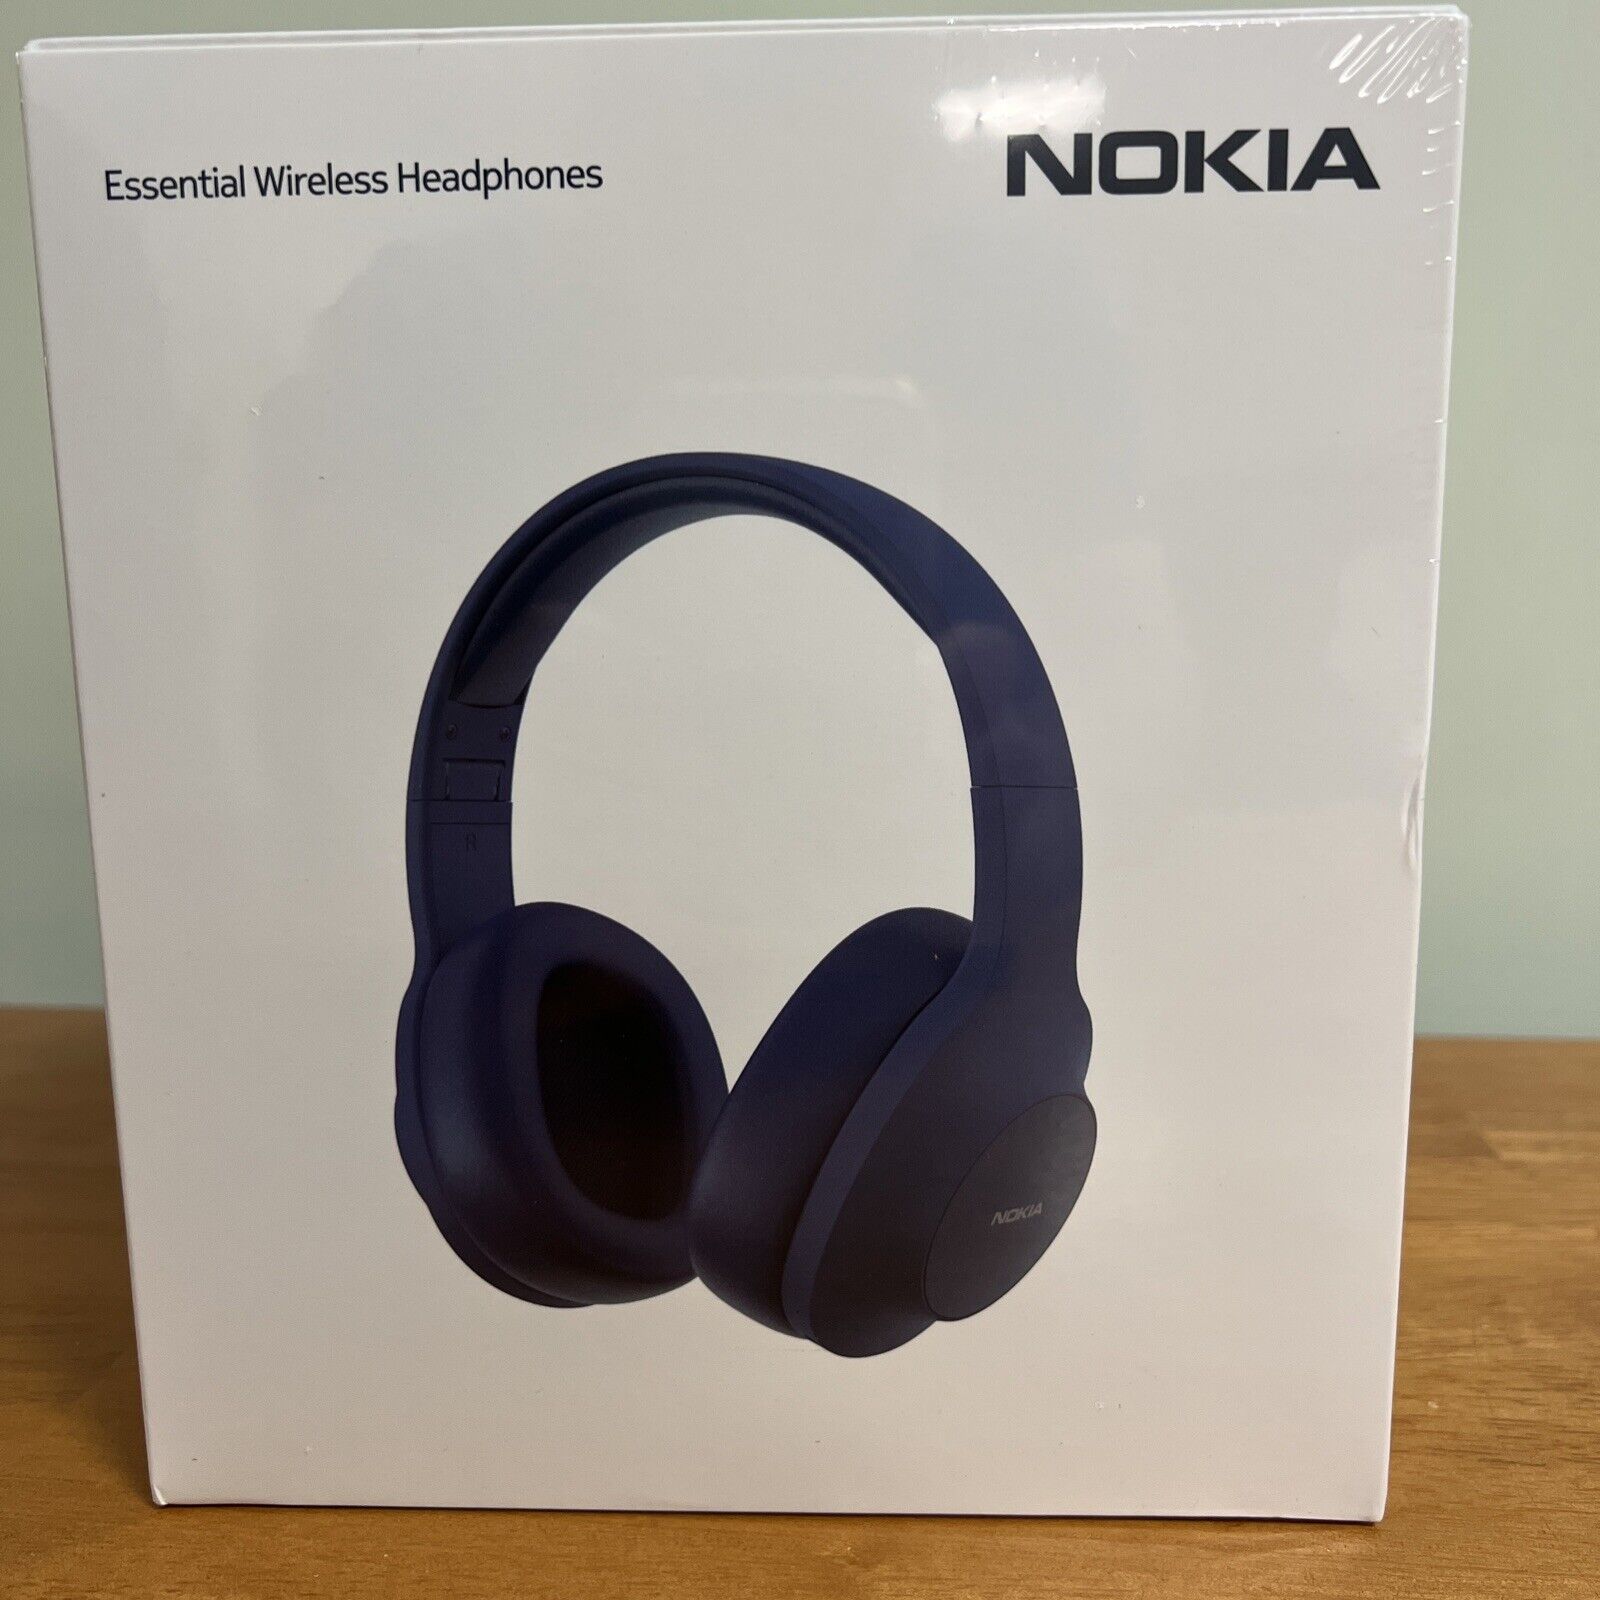 Nokia E1200 Essential Wireless Bluetooth Headphones - BLUE *BRAND NEW IN BOX* !